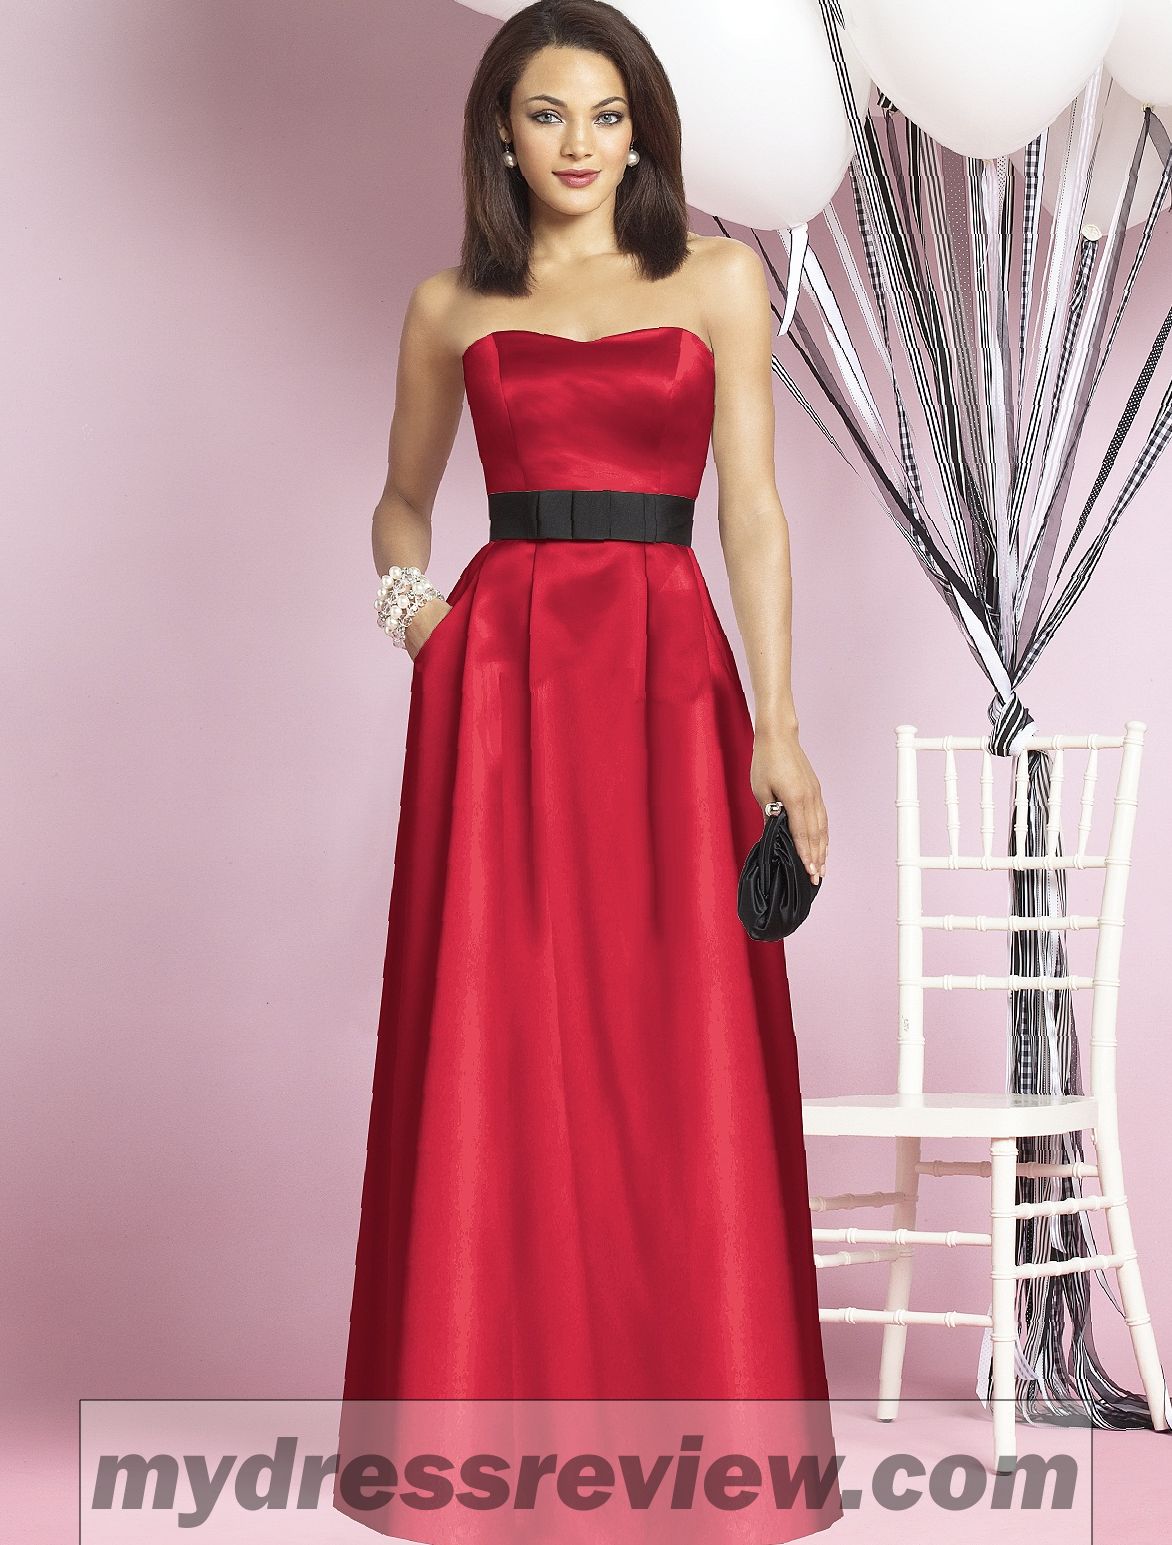 Red Floor Length Bridesmaid Dresses : 20 Great Ideas